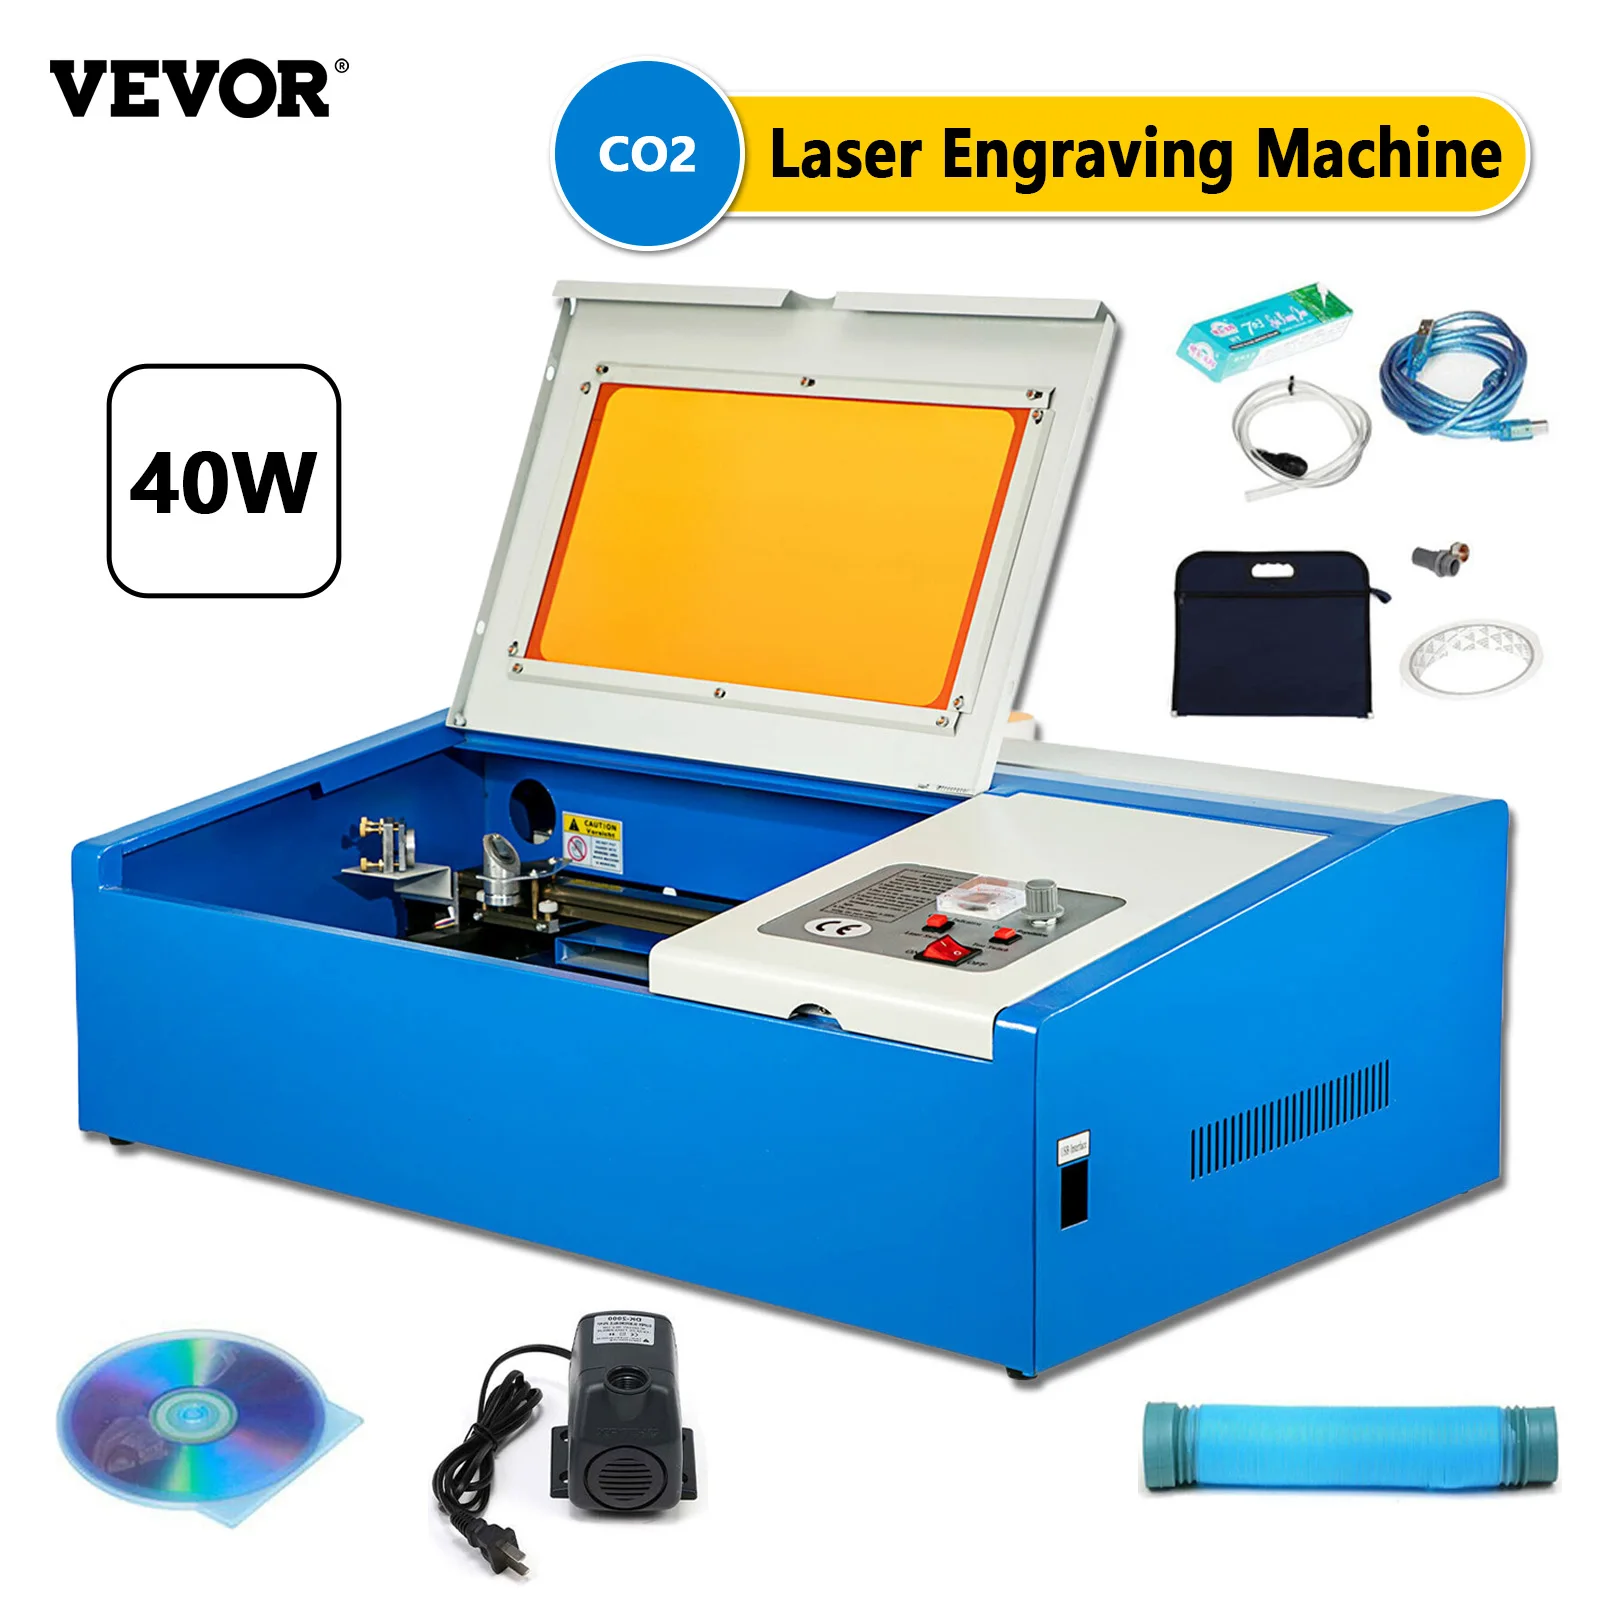 

VEVOR 40W CO2 Laser Engraving Cutting Machine K40 laser engraver 300x200mm USB Port And Digital Display with 4 Wheel